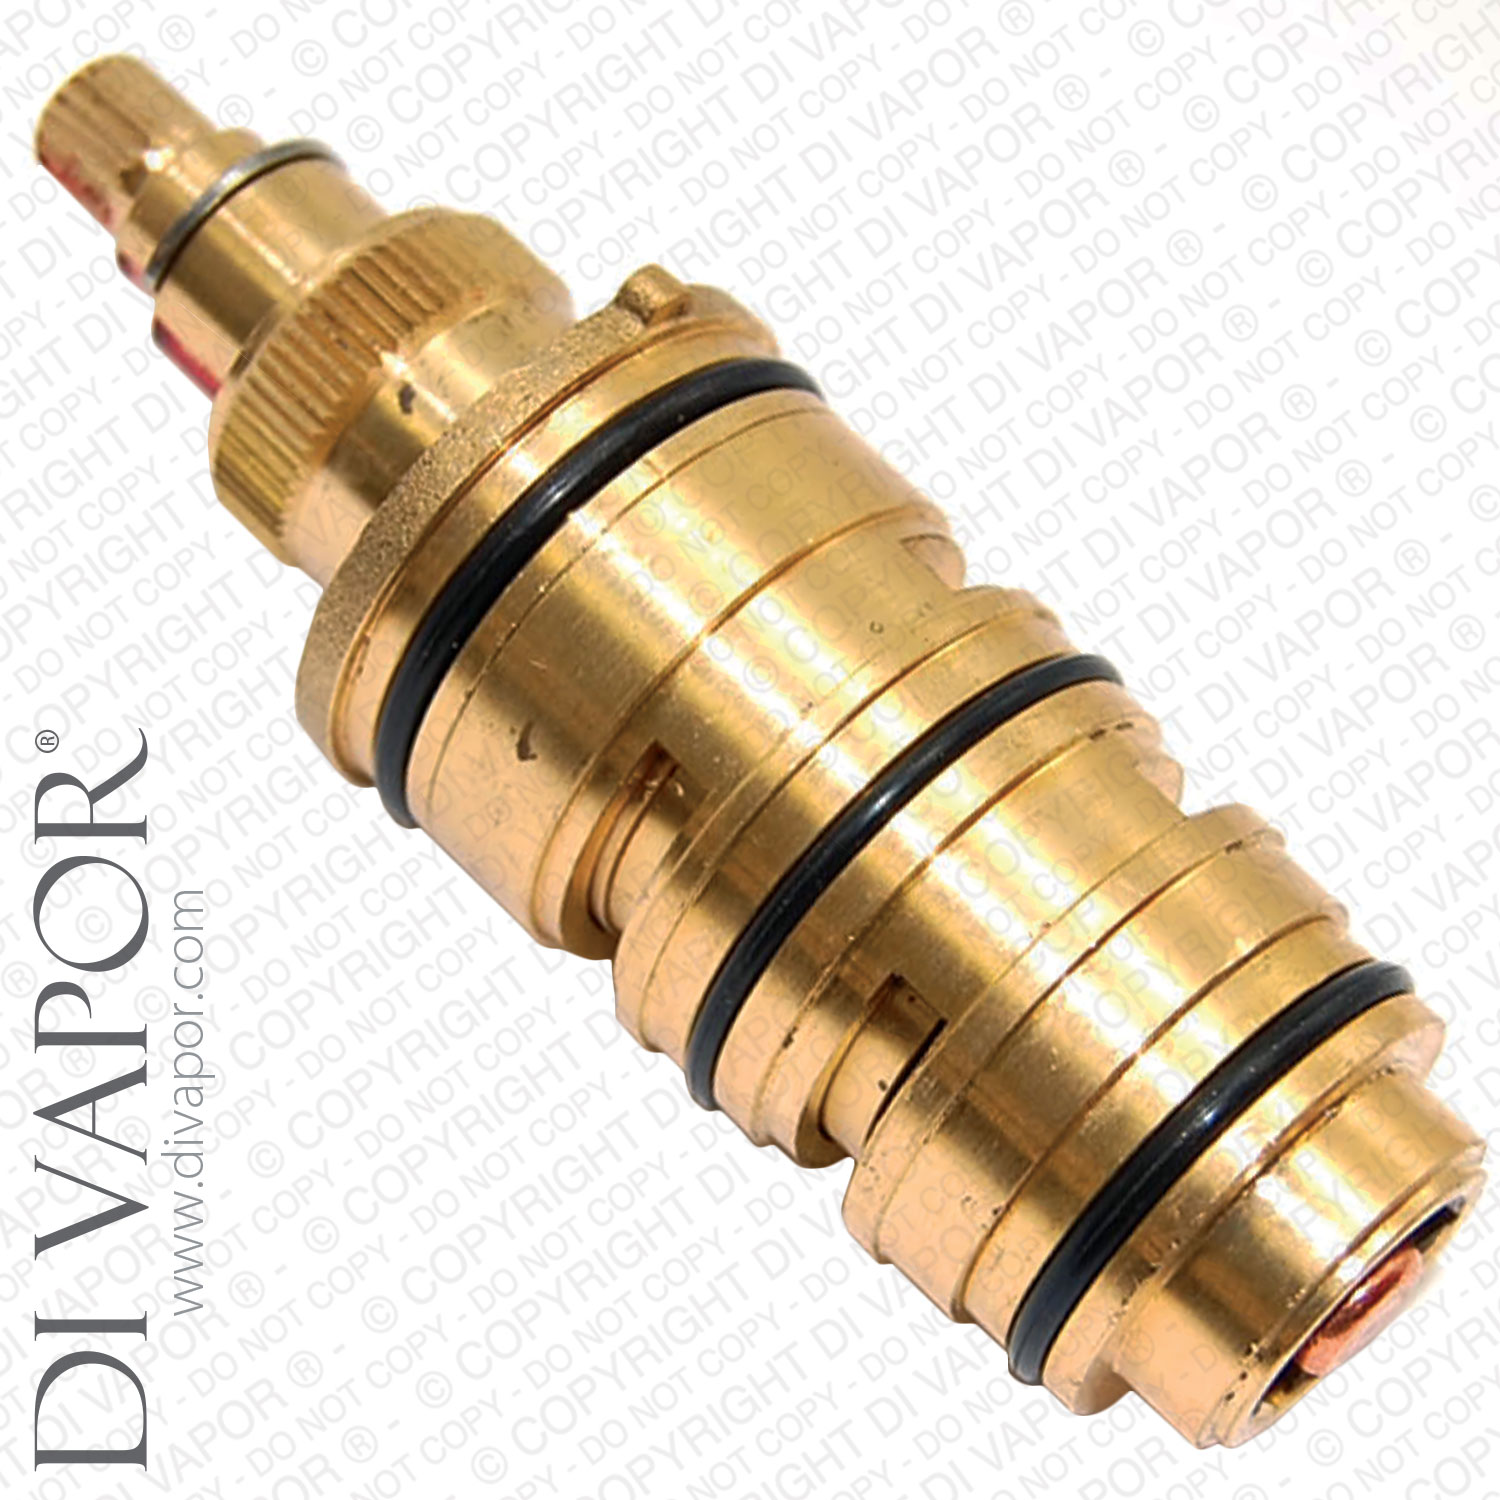 Shower mixer valve replacement parts